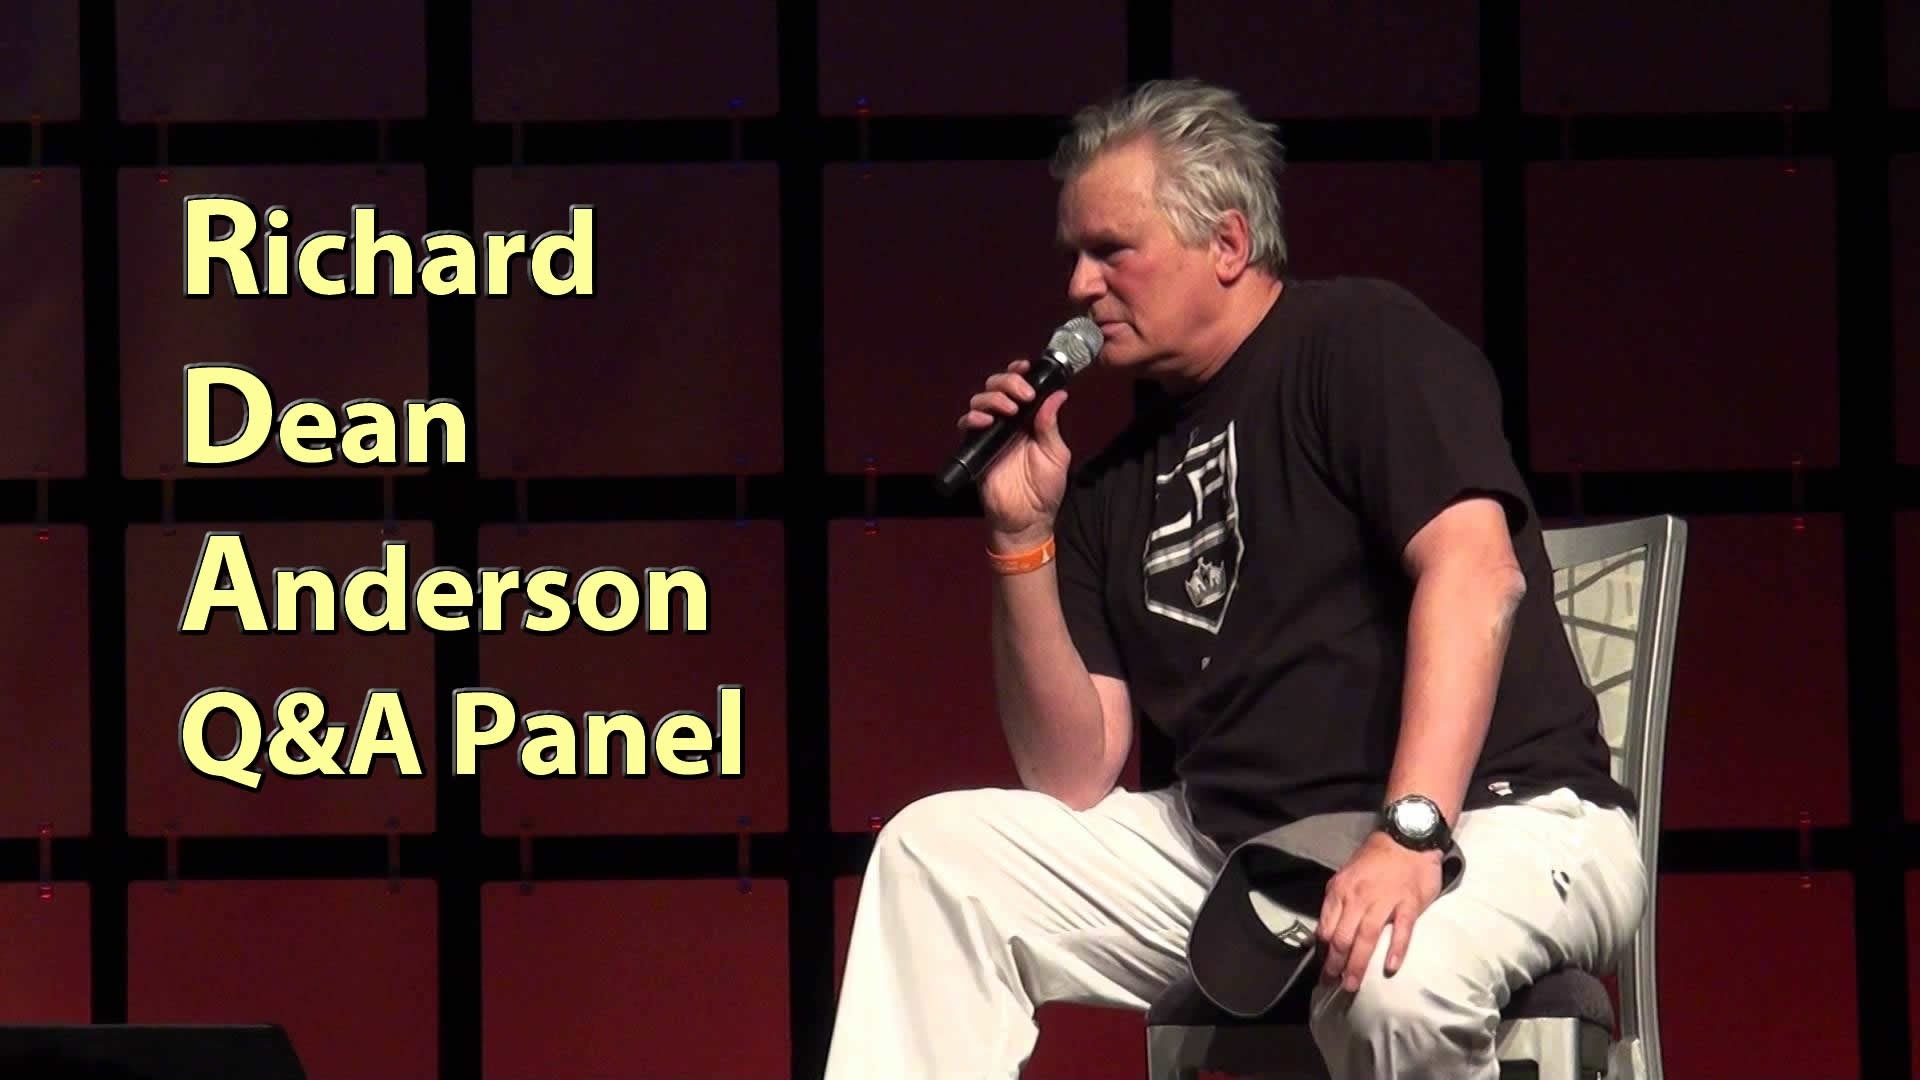 1920x1080 Richard Dean Anderson HD Phoenix Comicon 2014 MacGyver Stargate Panel -  YouTube